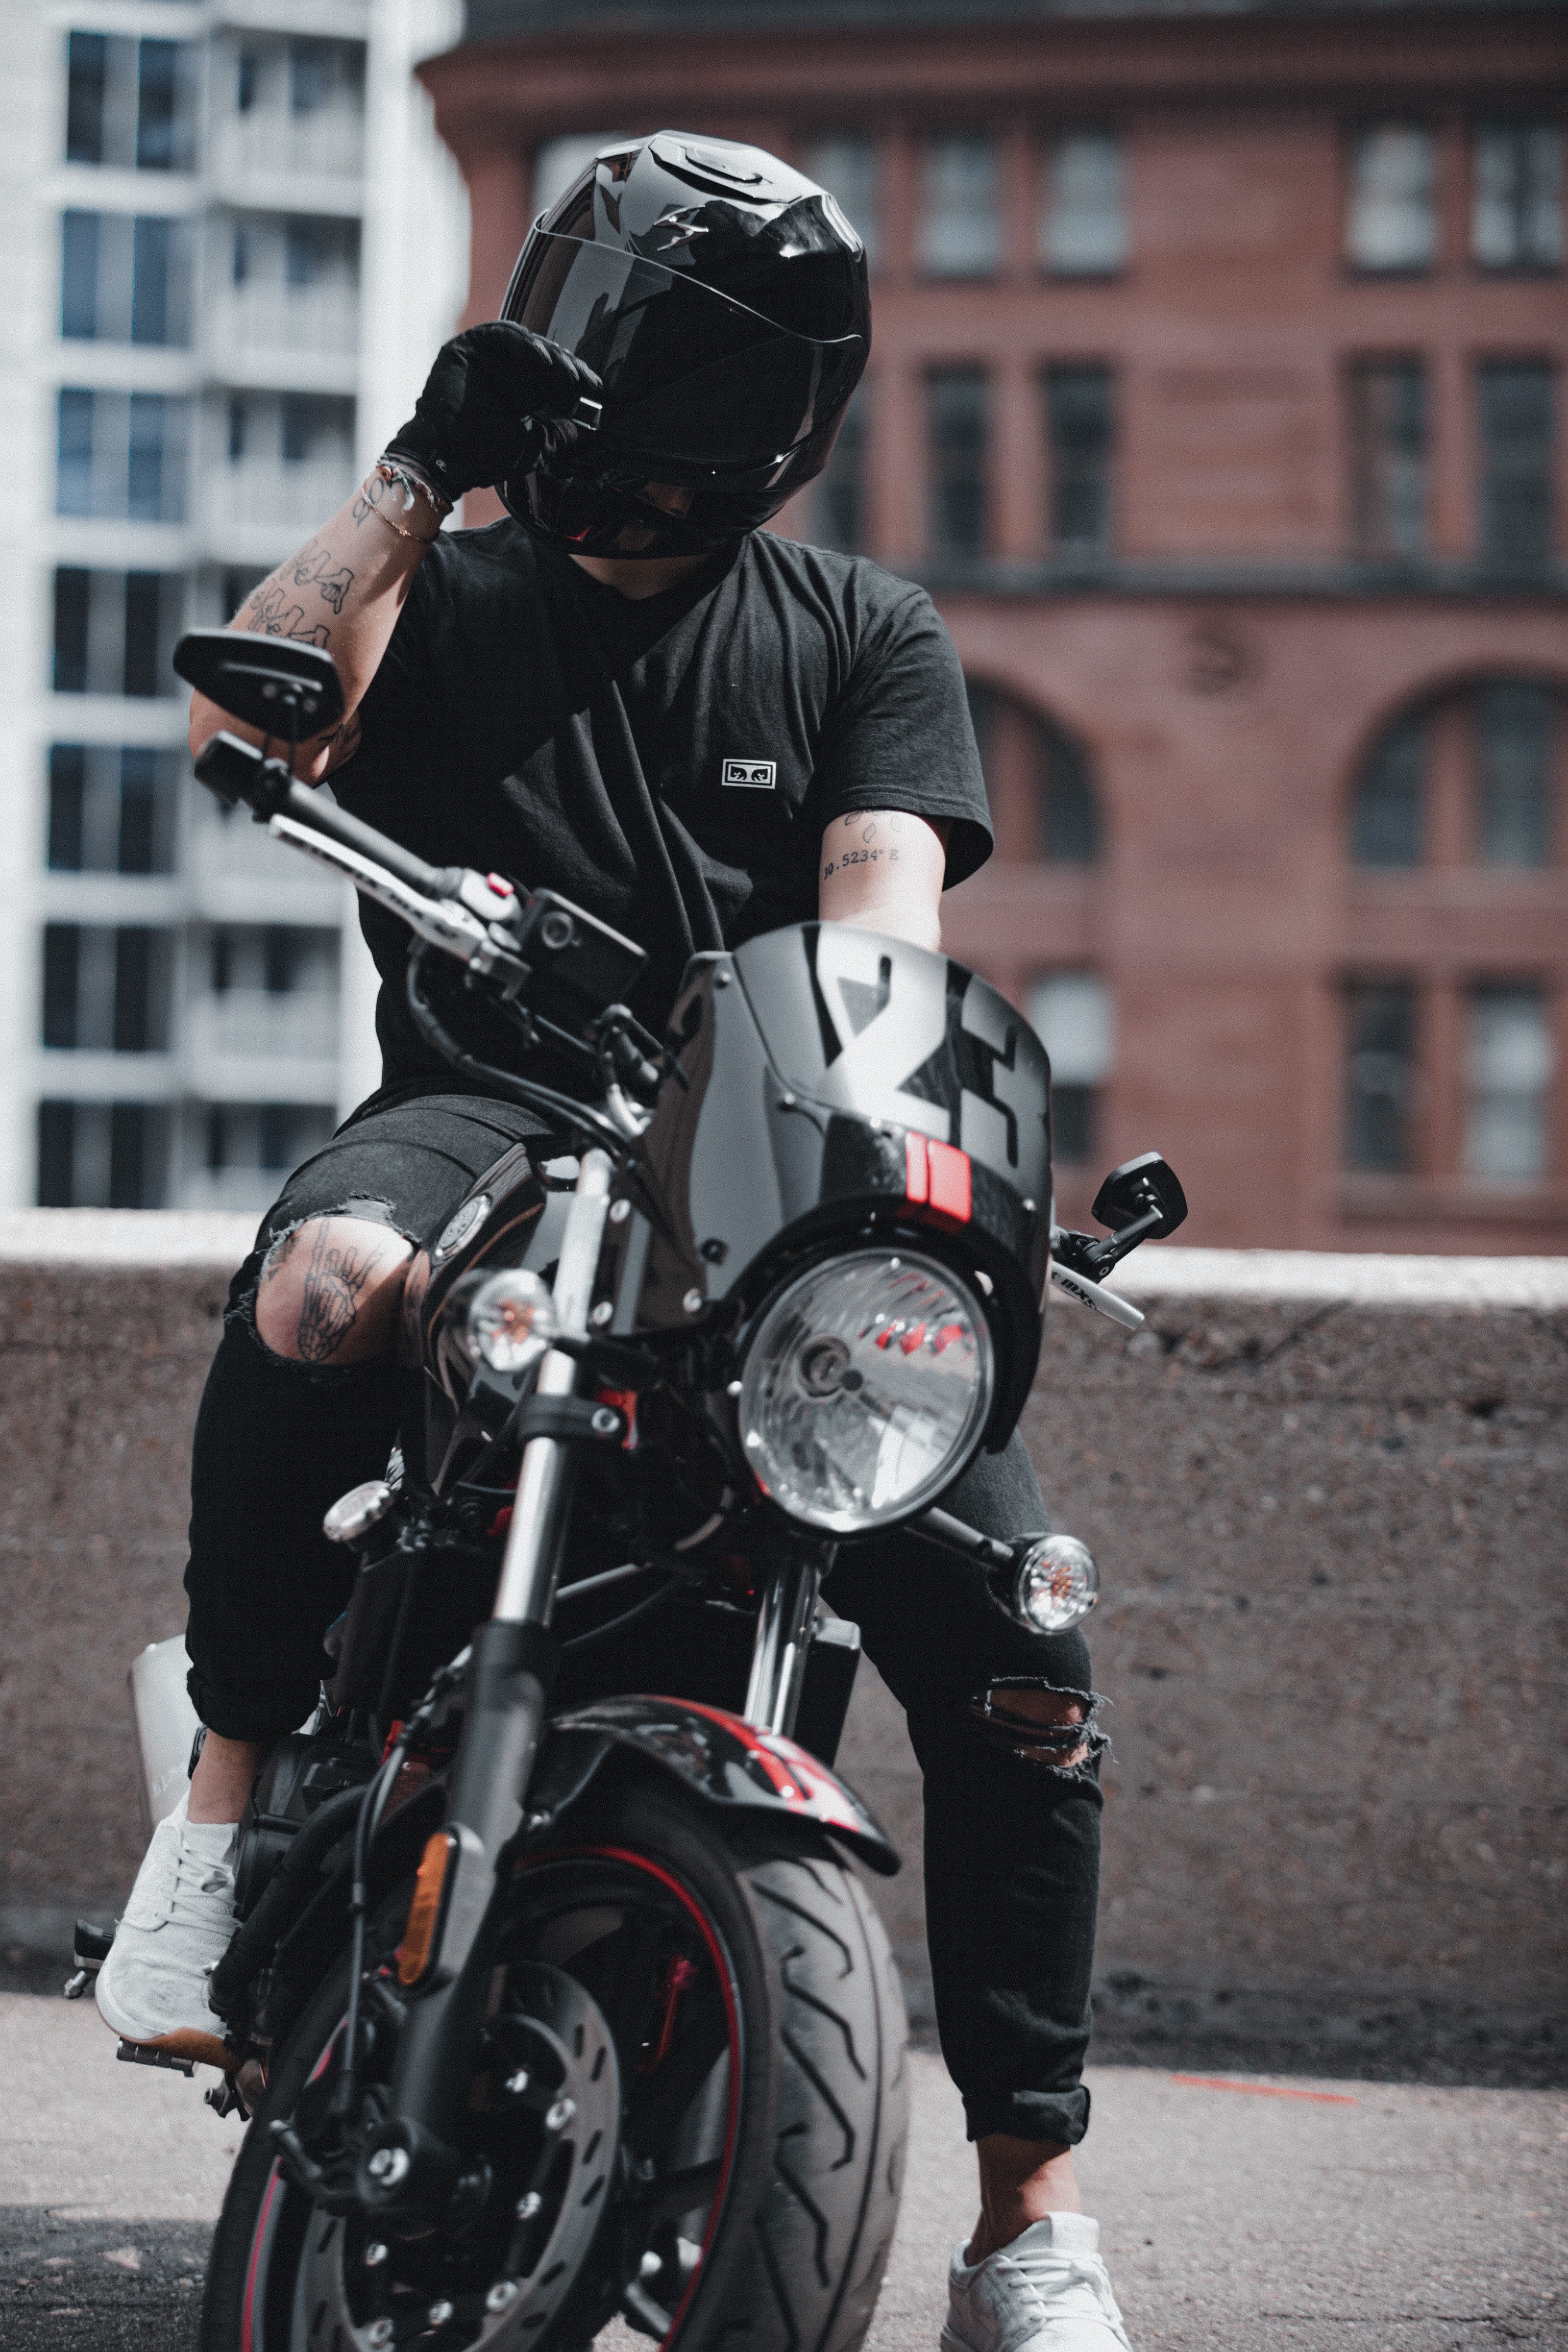 vertical wallpaper bike, motorcyclist, motorcycles, front view, helmet, motorcycle